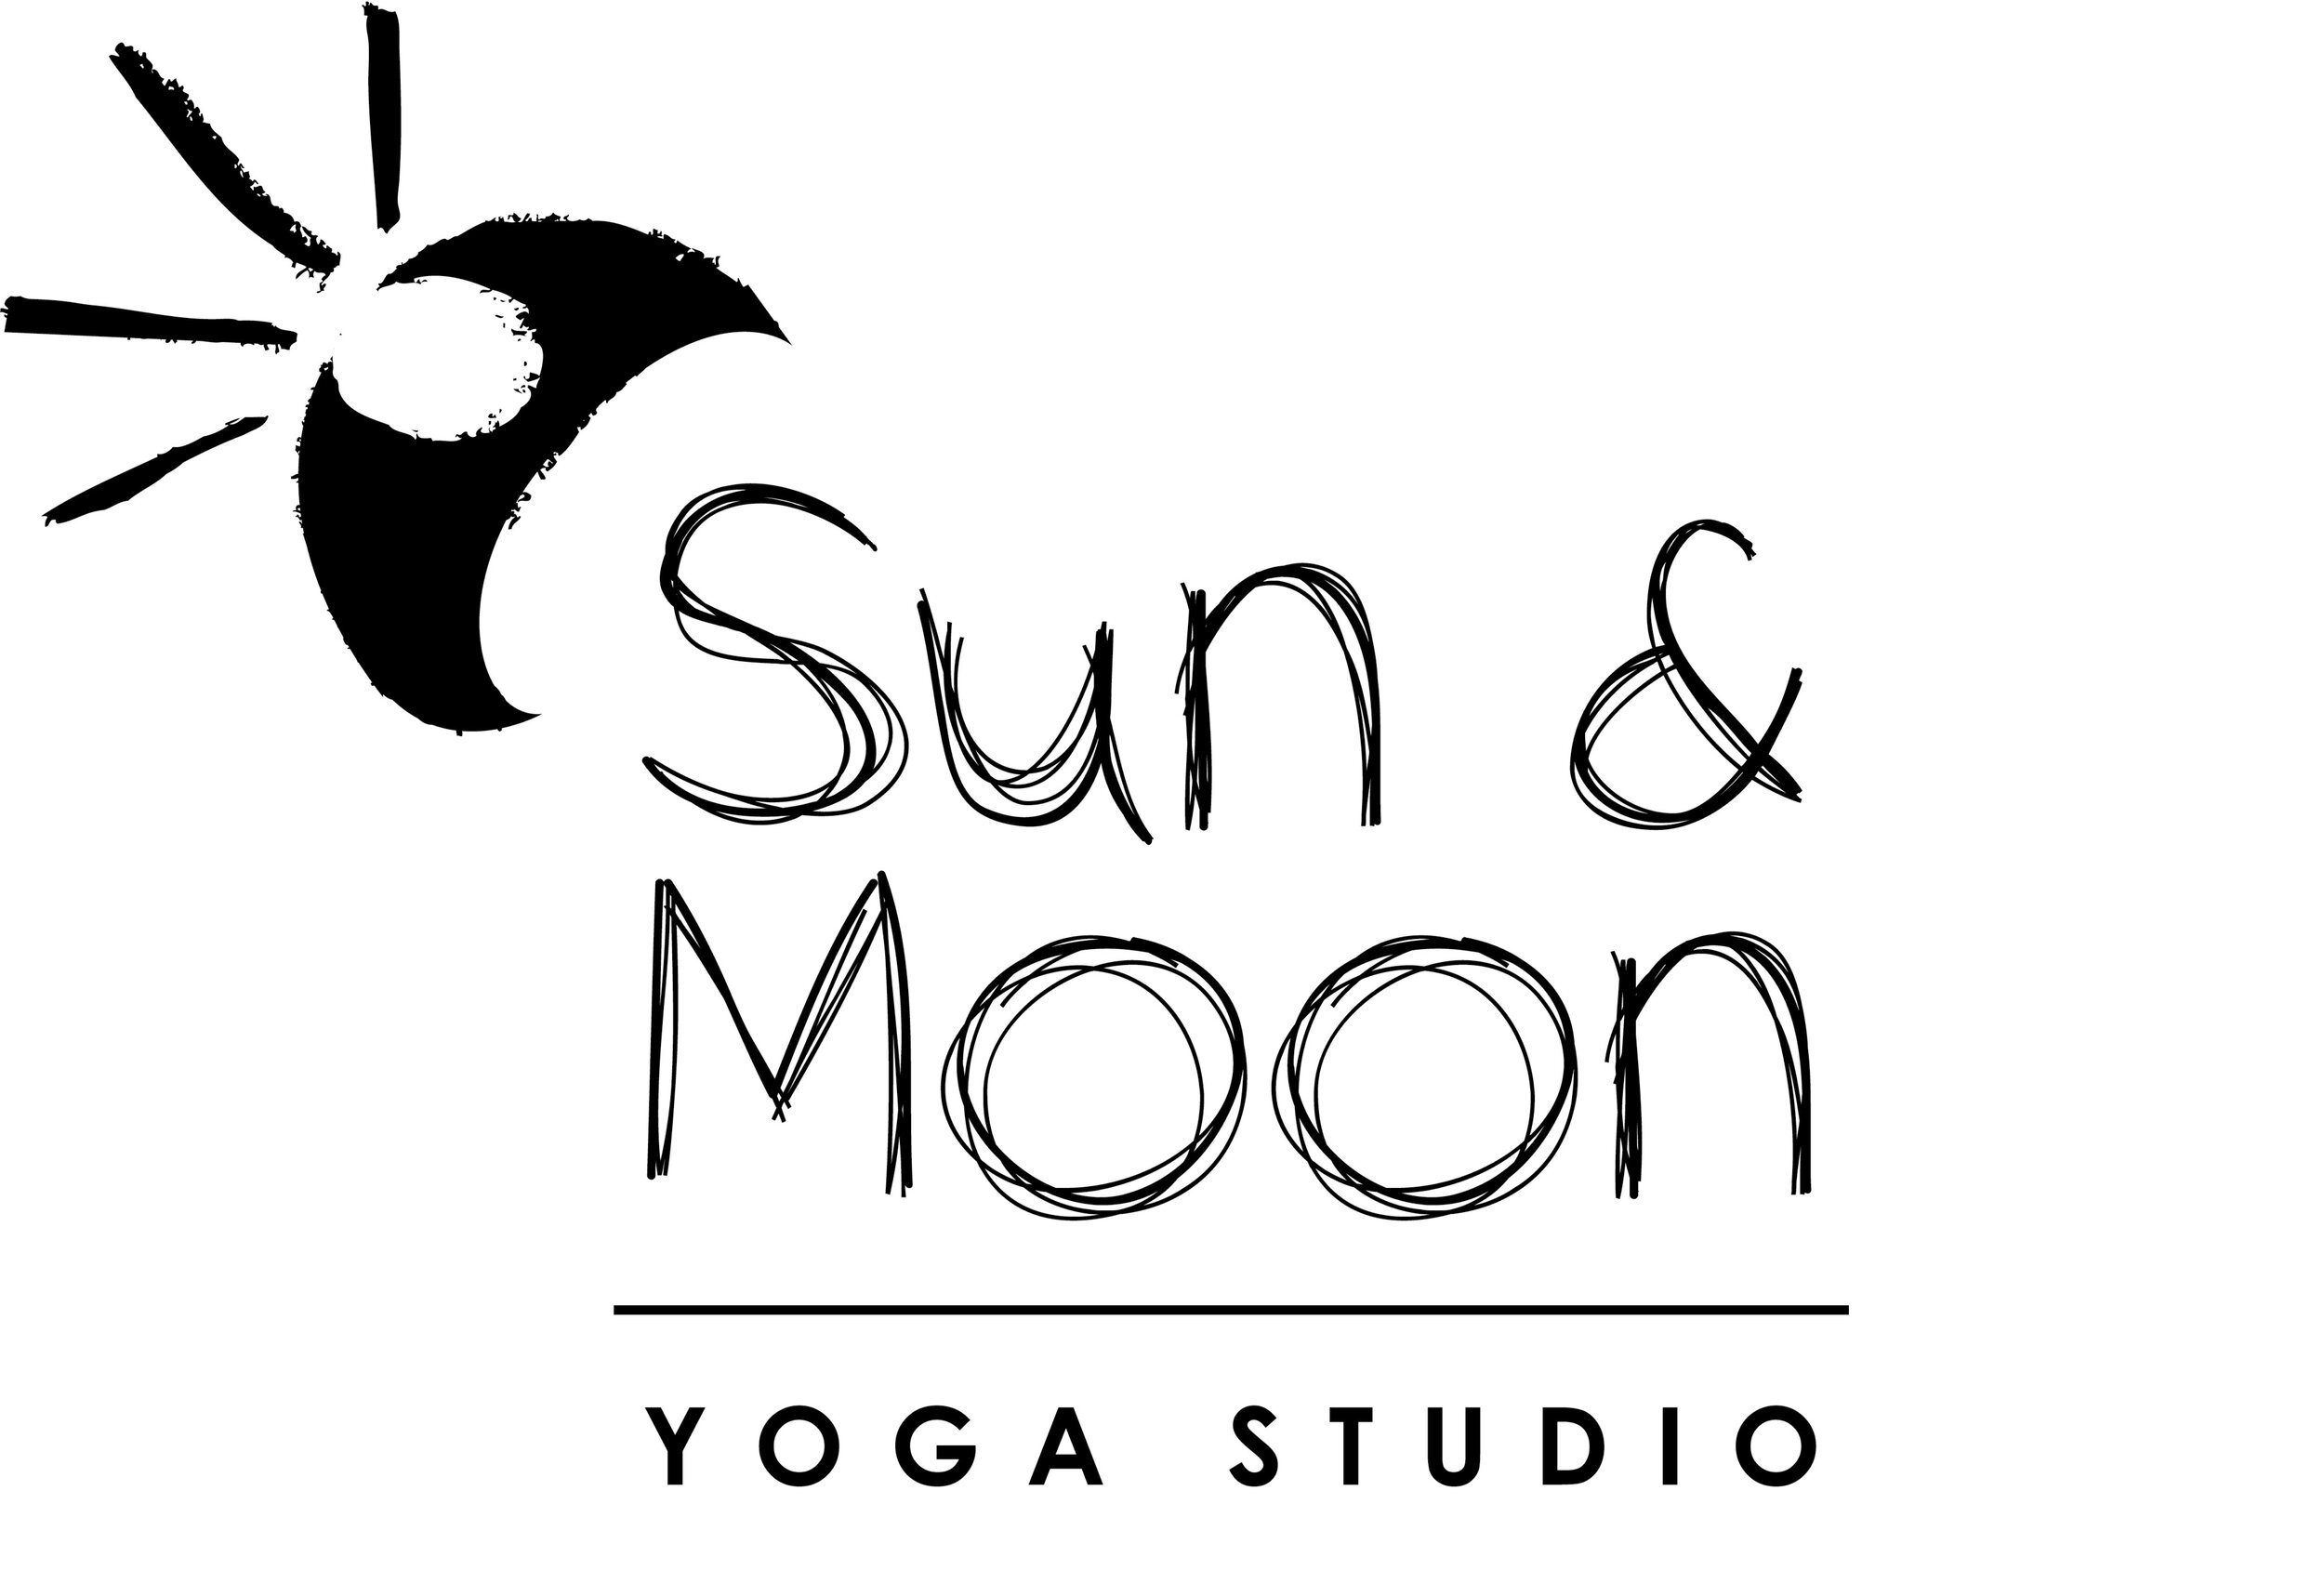 Sun Moon Yoga